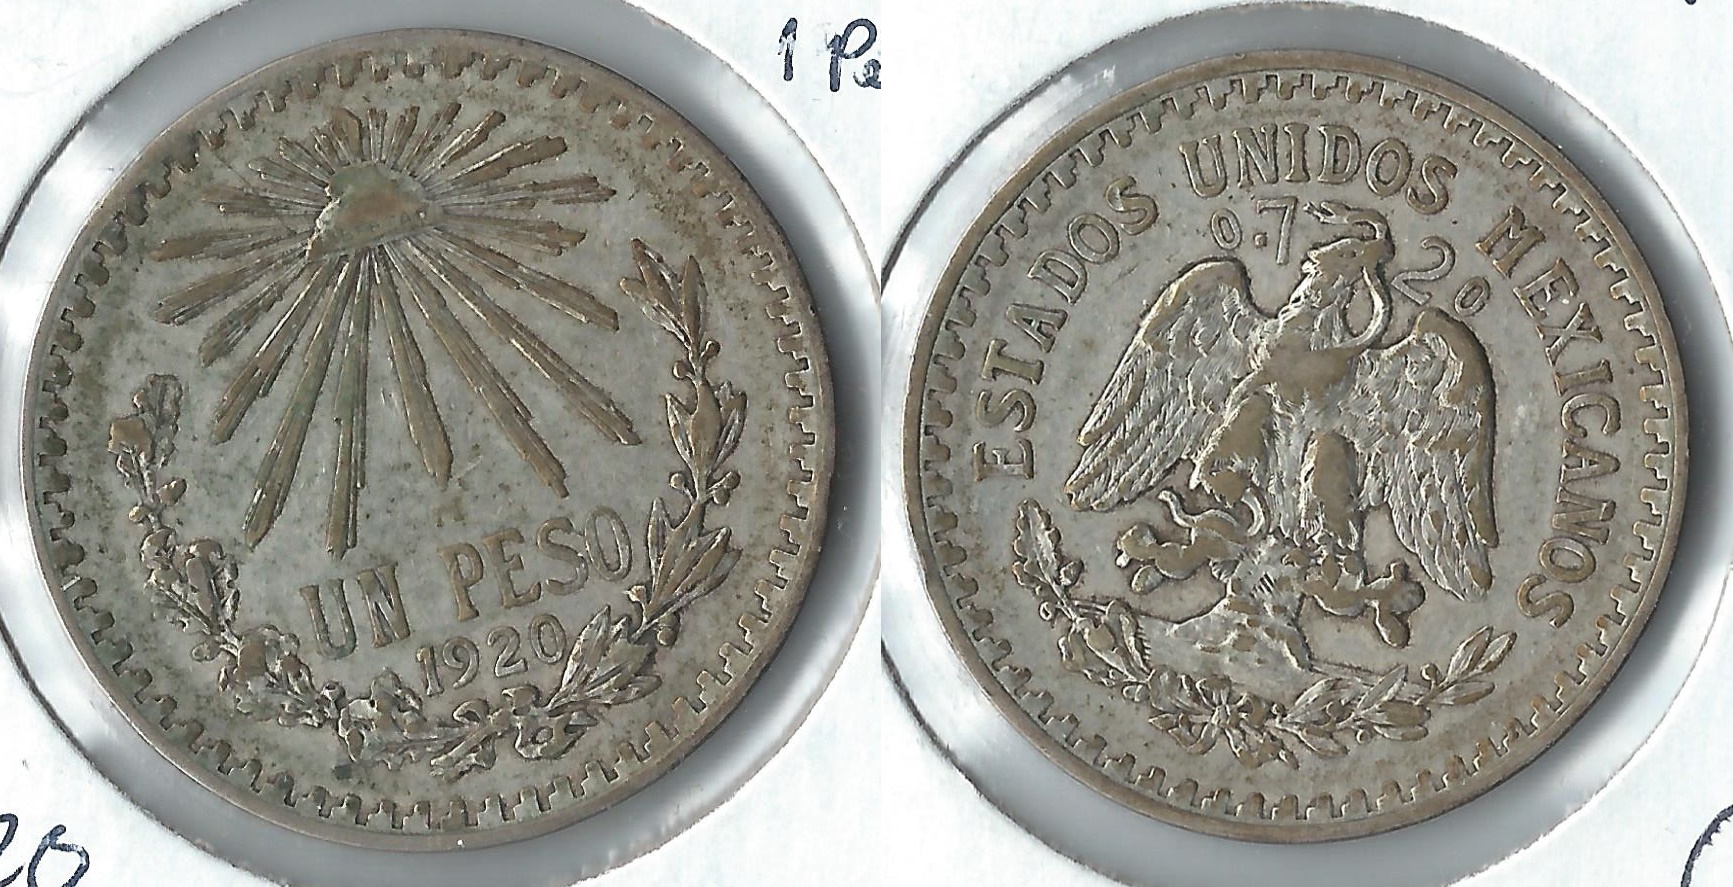 1920 mexico 1 peso.jpg